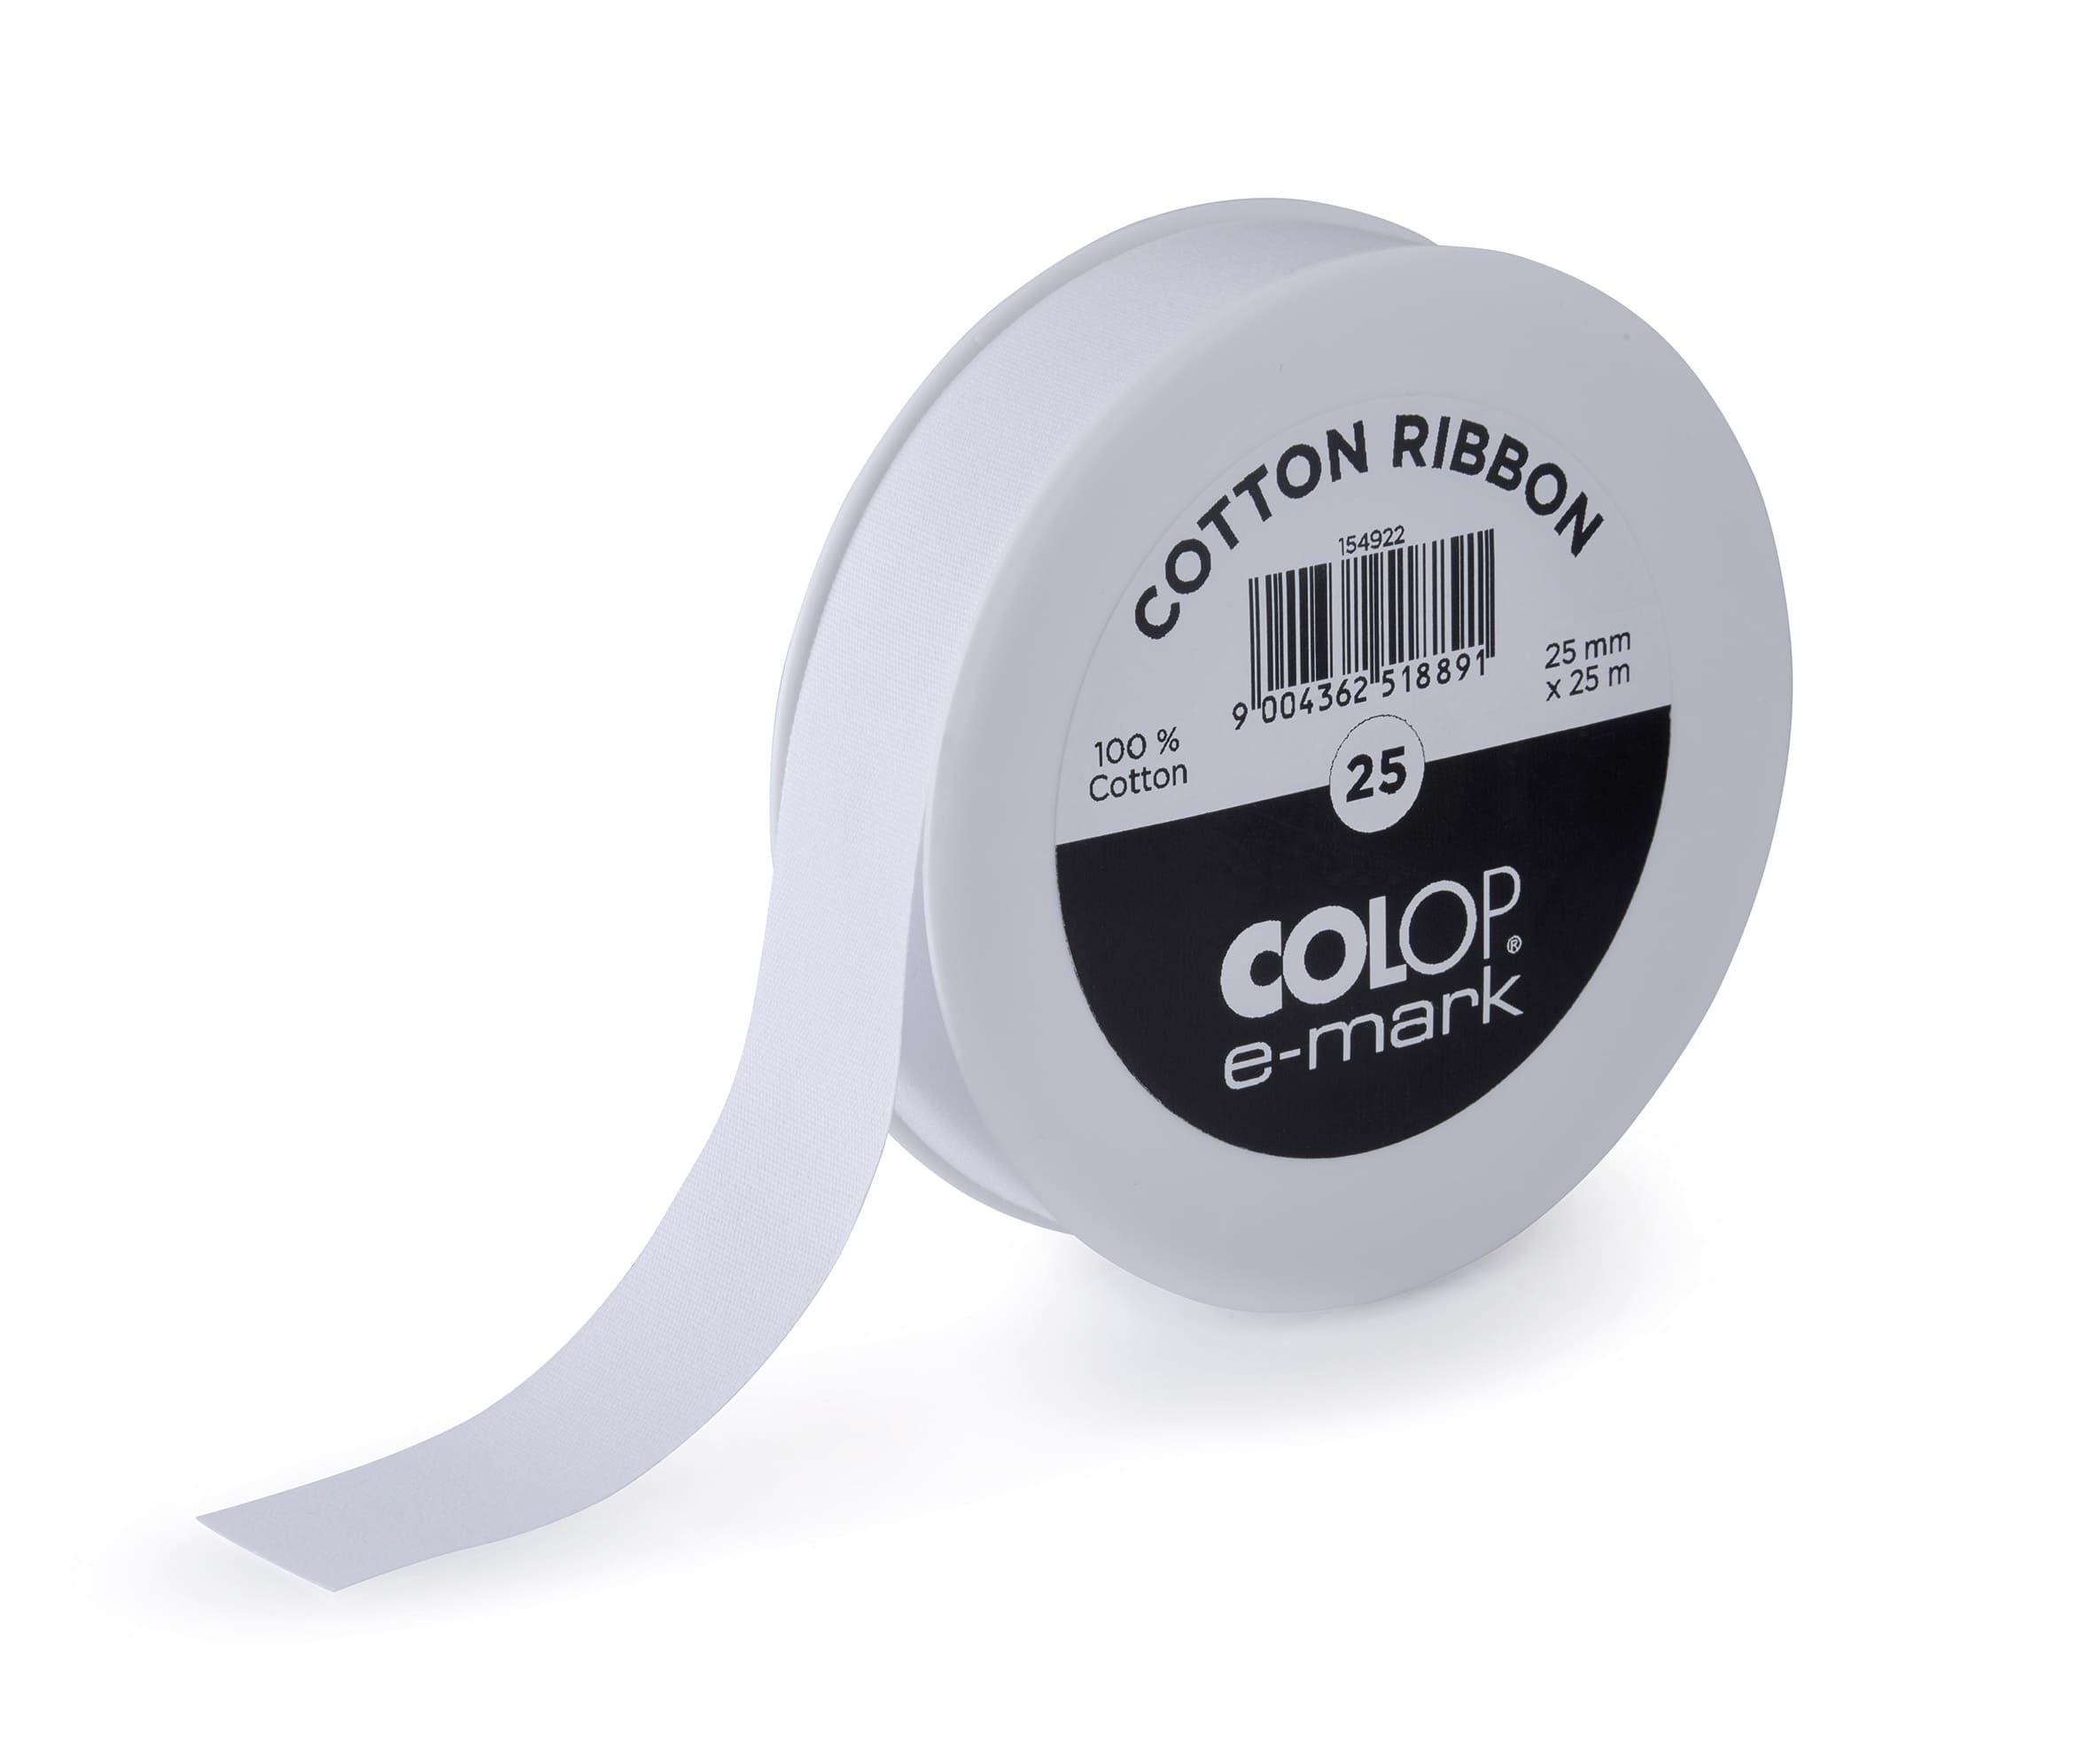 COLOP Ruban de coton 25mmx25m 154922 pour e-mark, blanc